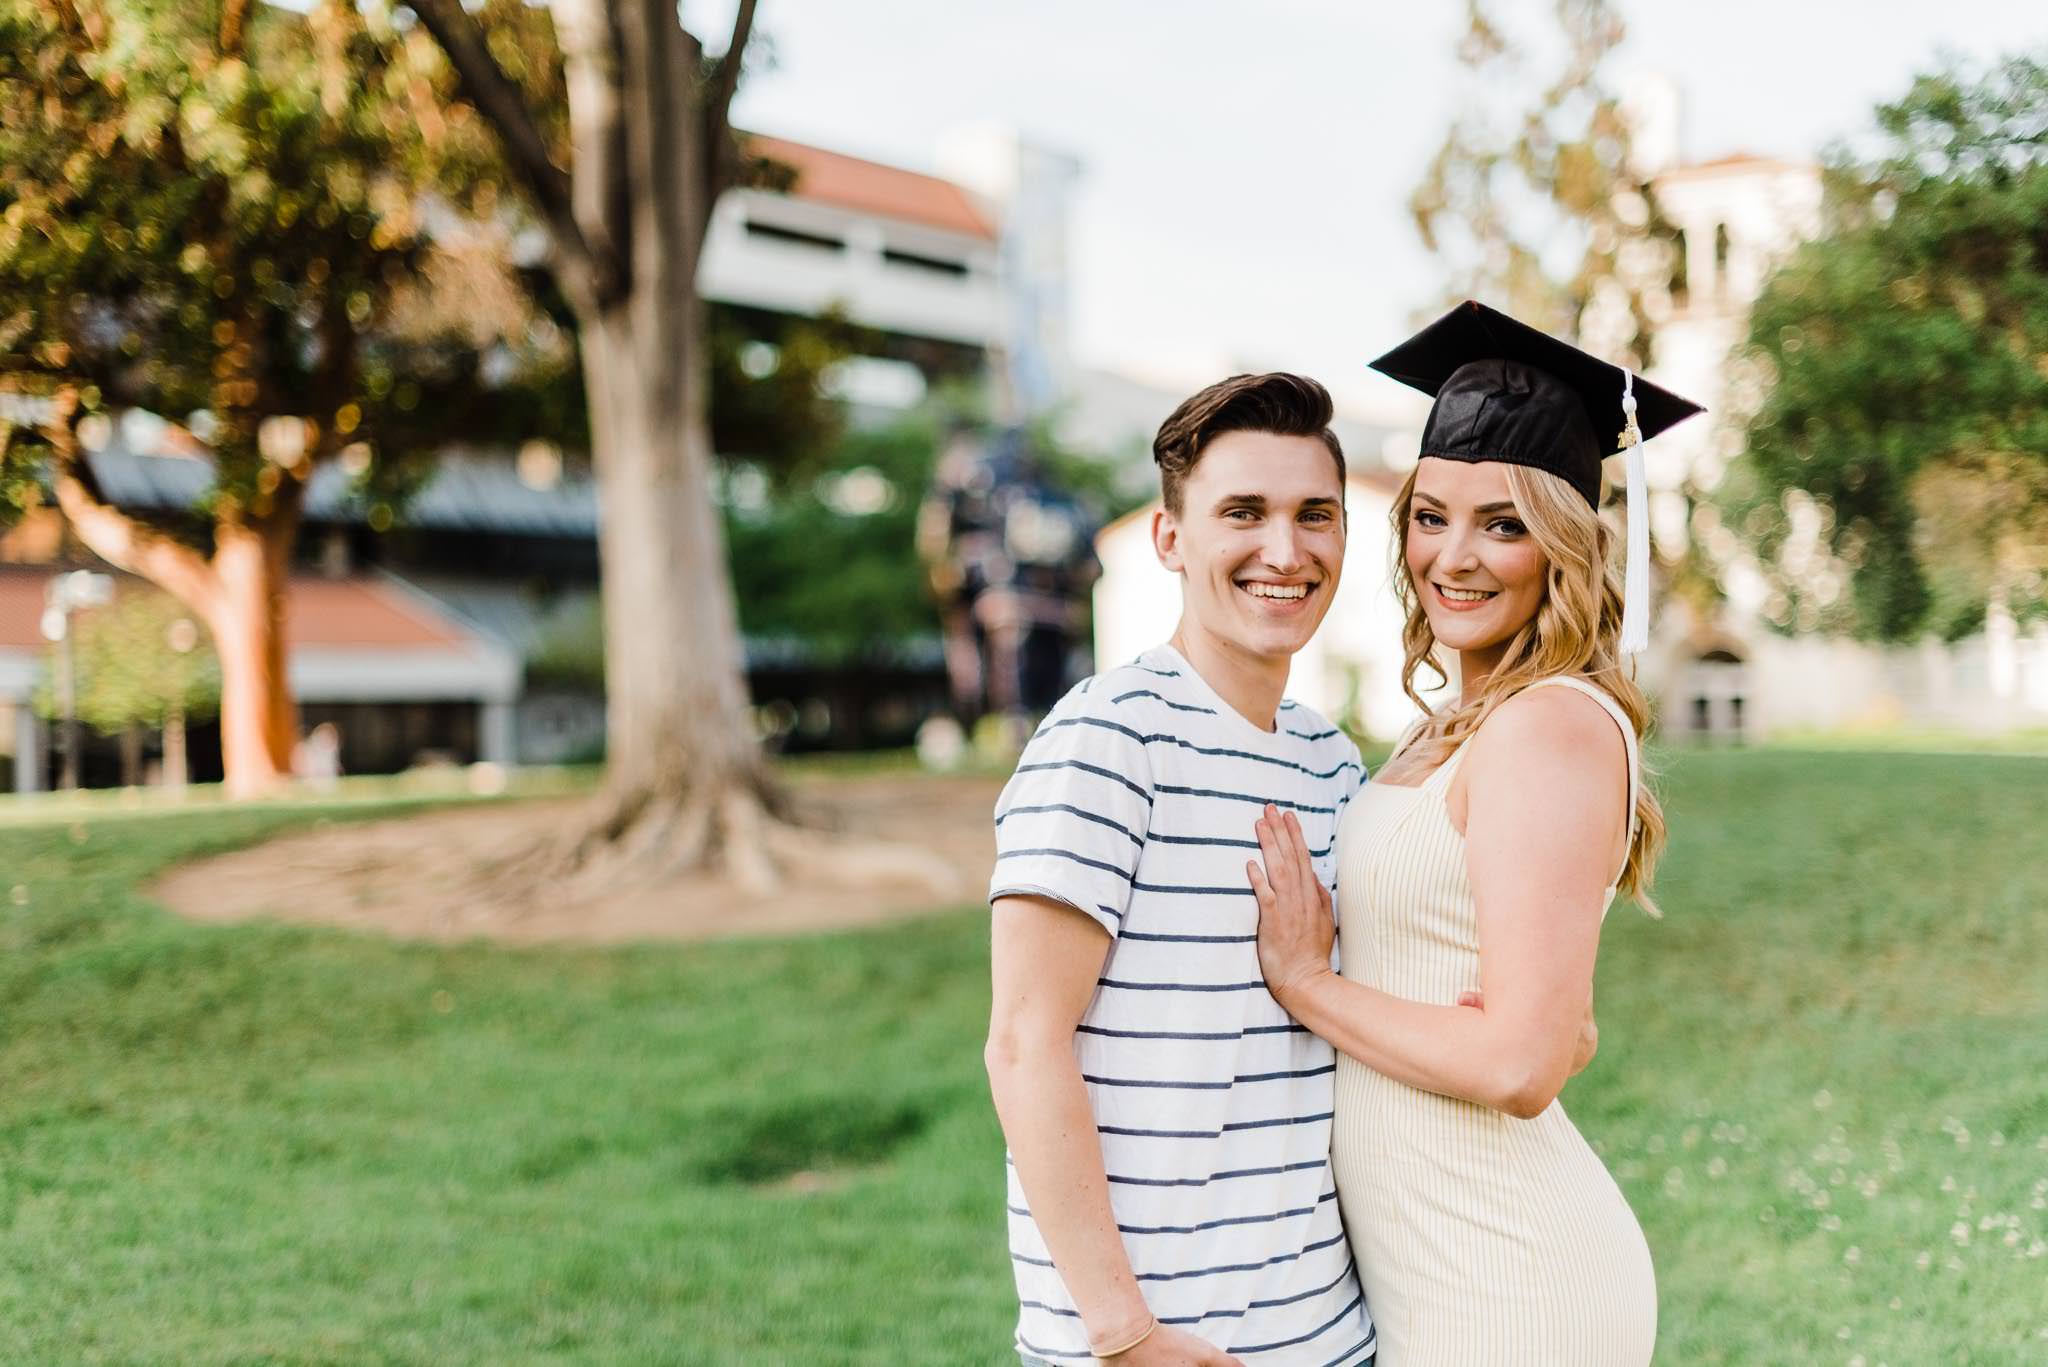 Couple, woman wearing graduation cap